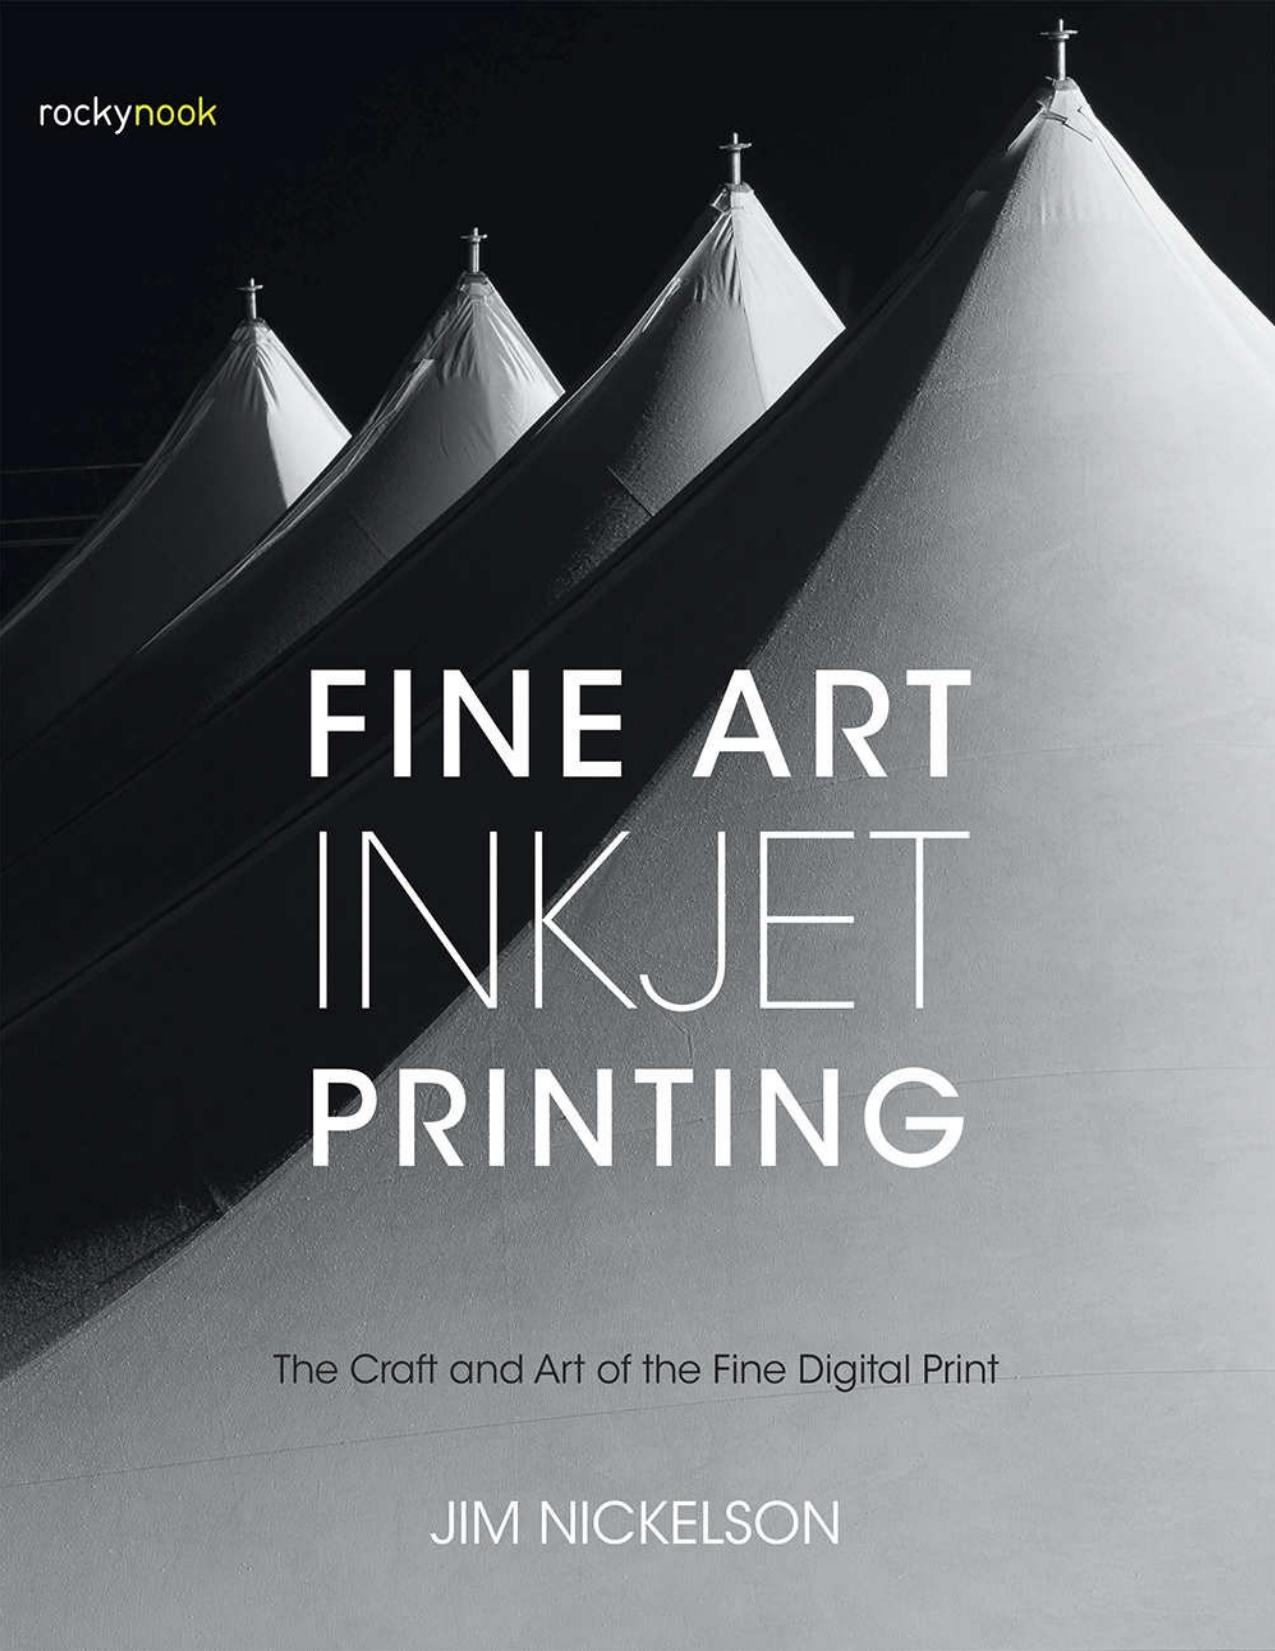 Fine Art Inkjet Printing: The Craft and Art of the Fine Digital Print - PDFDrive.com